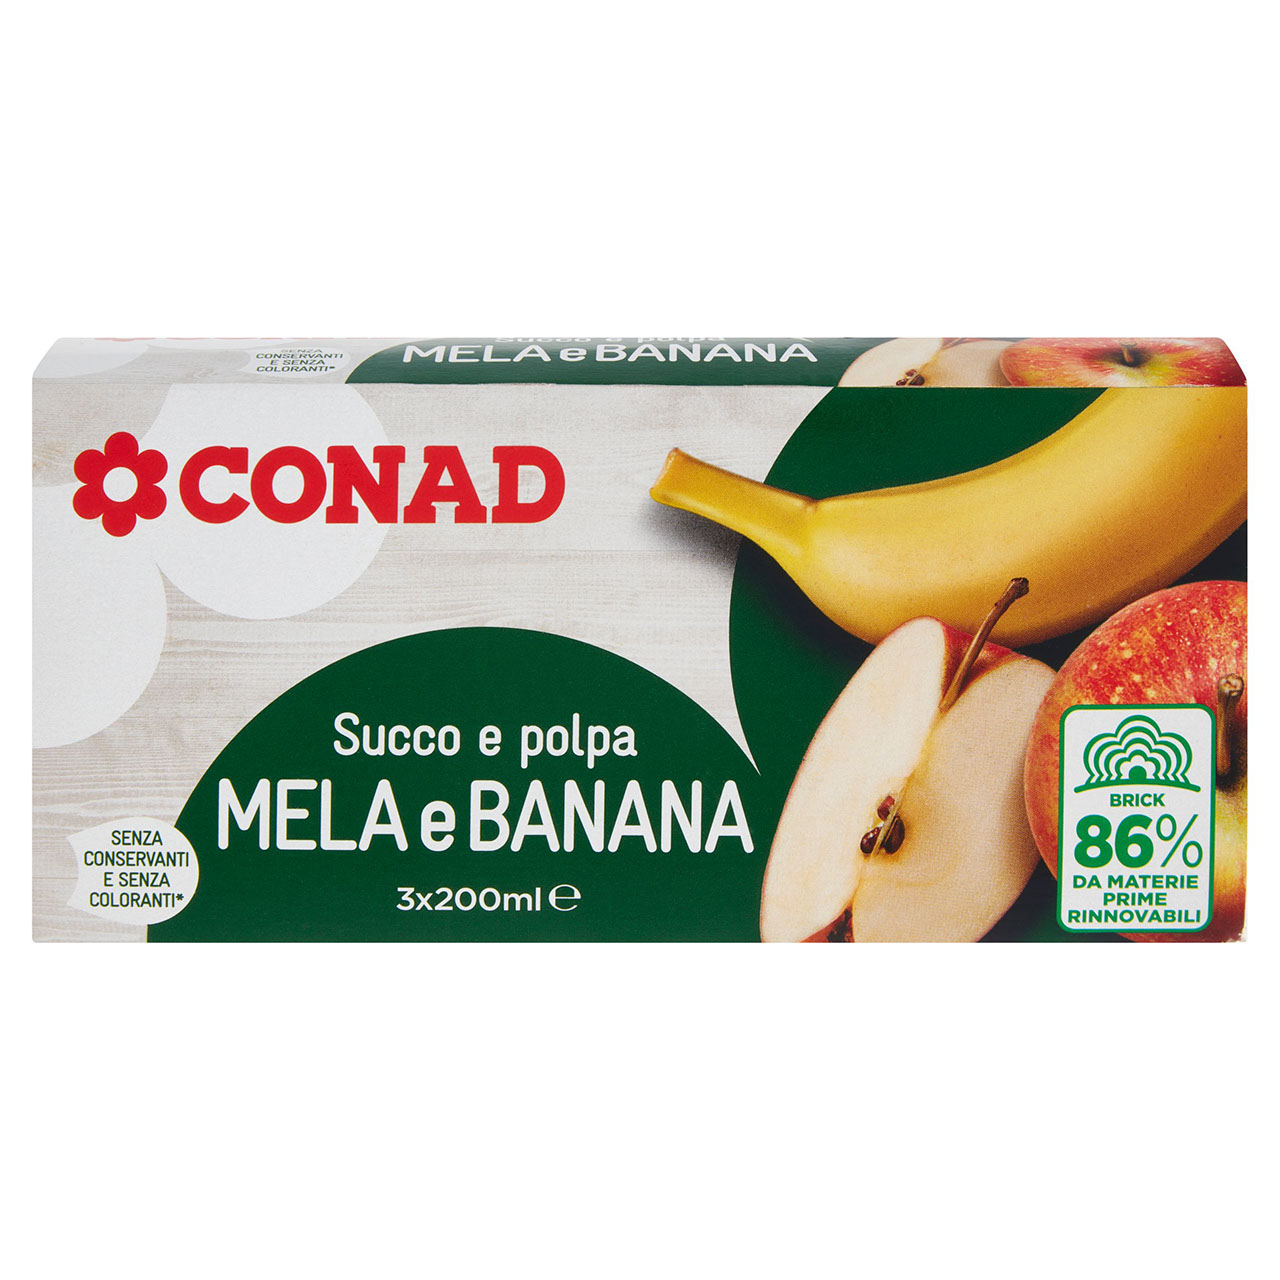 Succo e polpa Mela e Banana Conad online